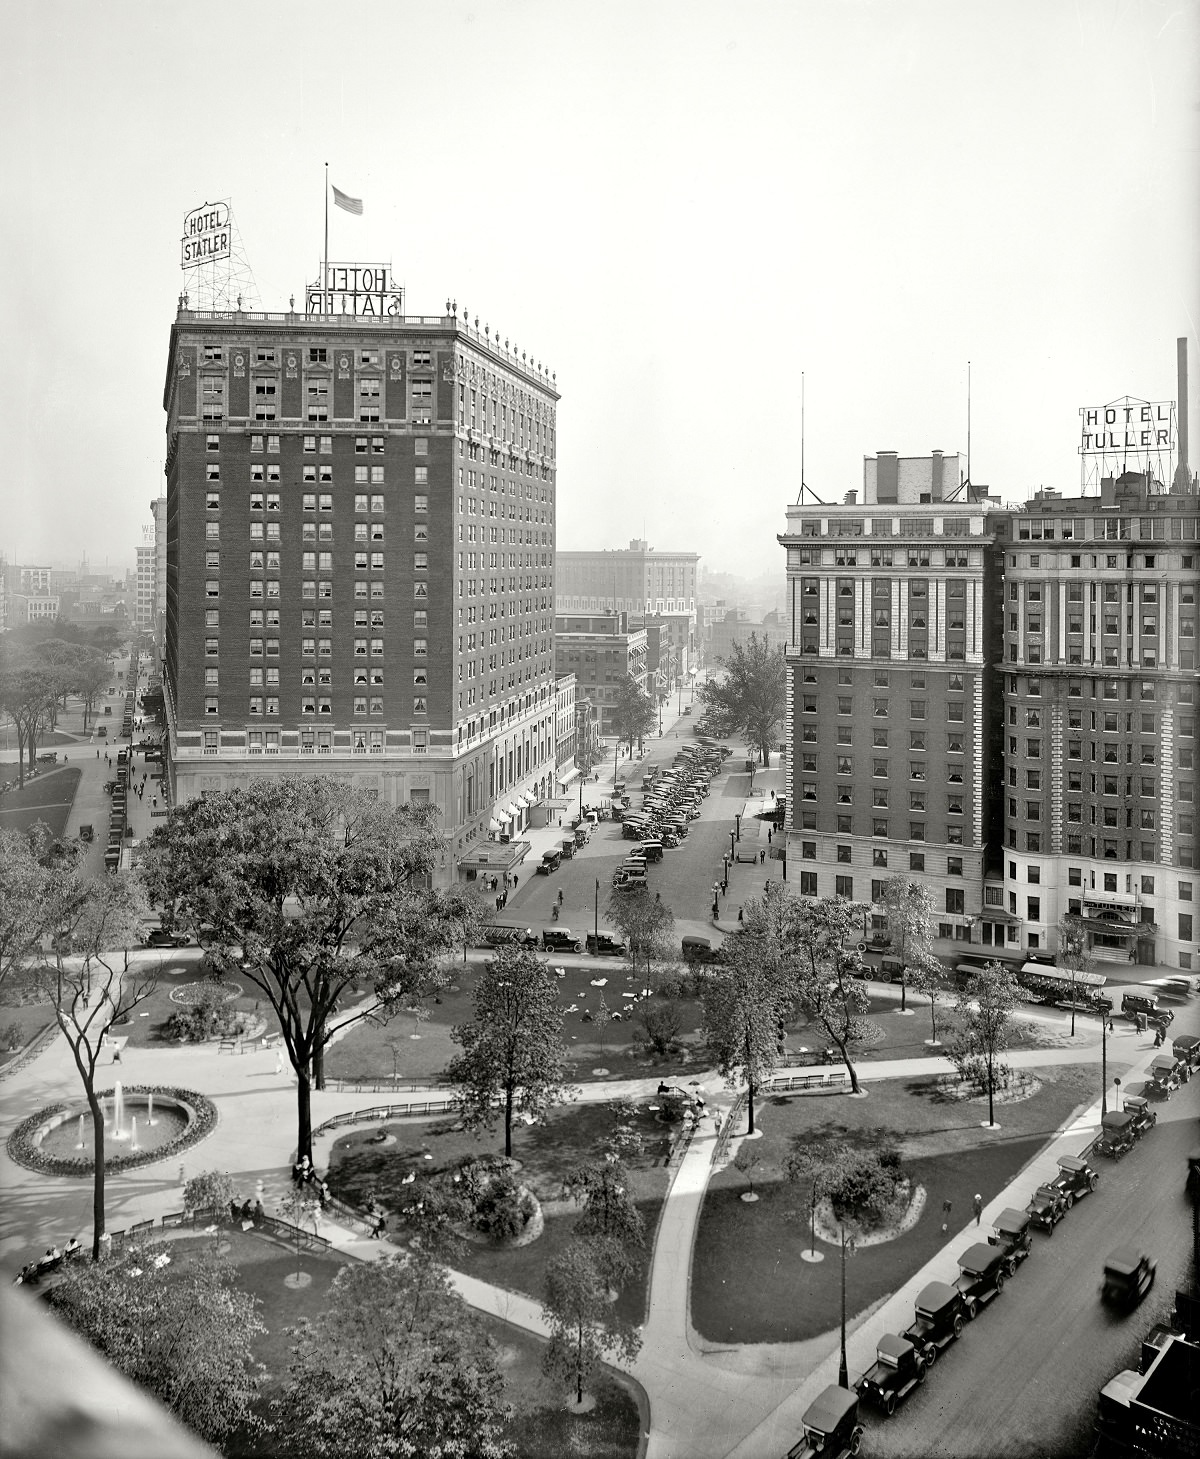 Hotel Tuler and Hotel Statler in Detroit, Michigan, circa 1920.